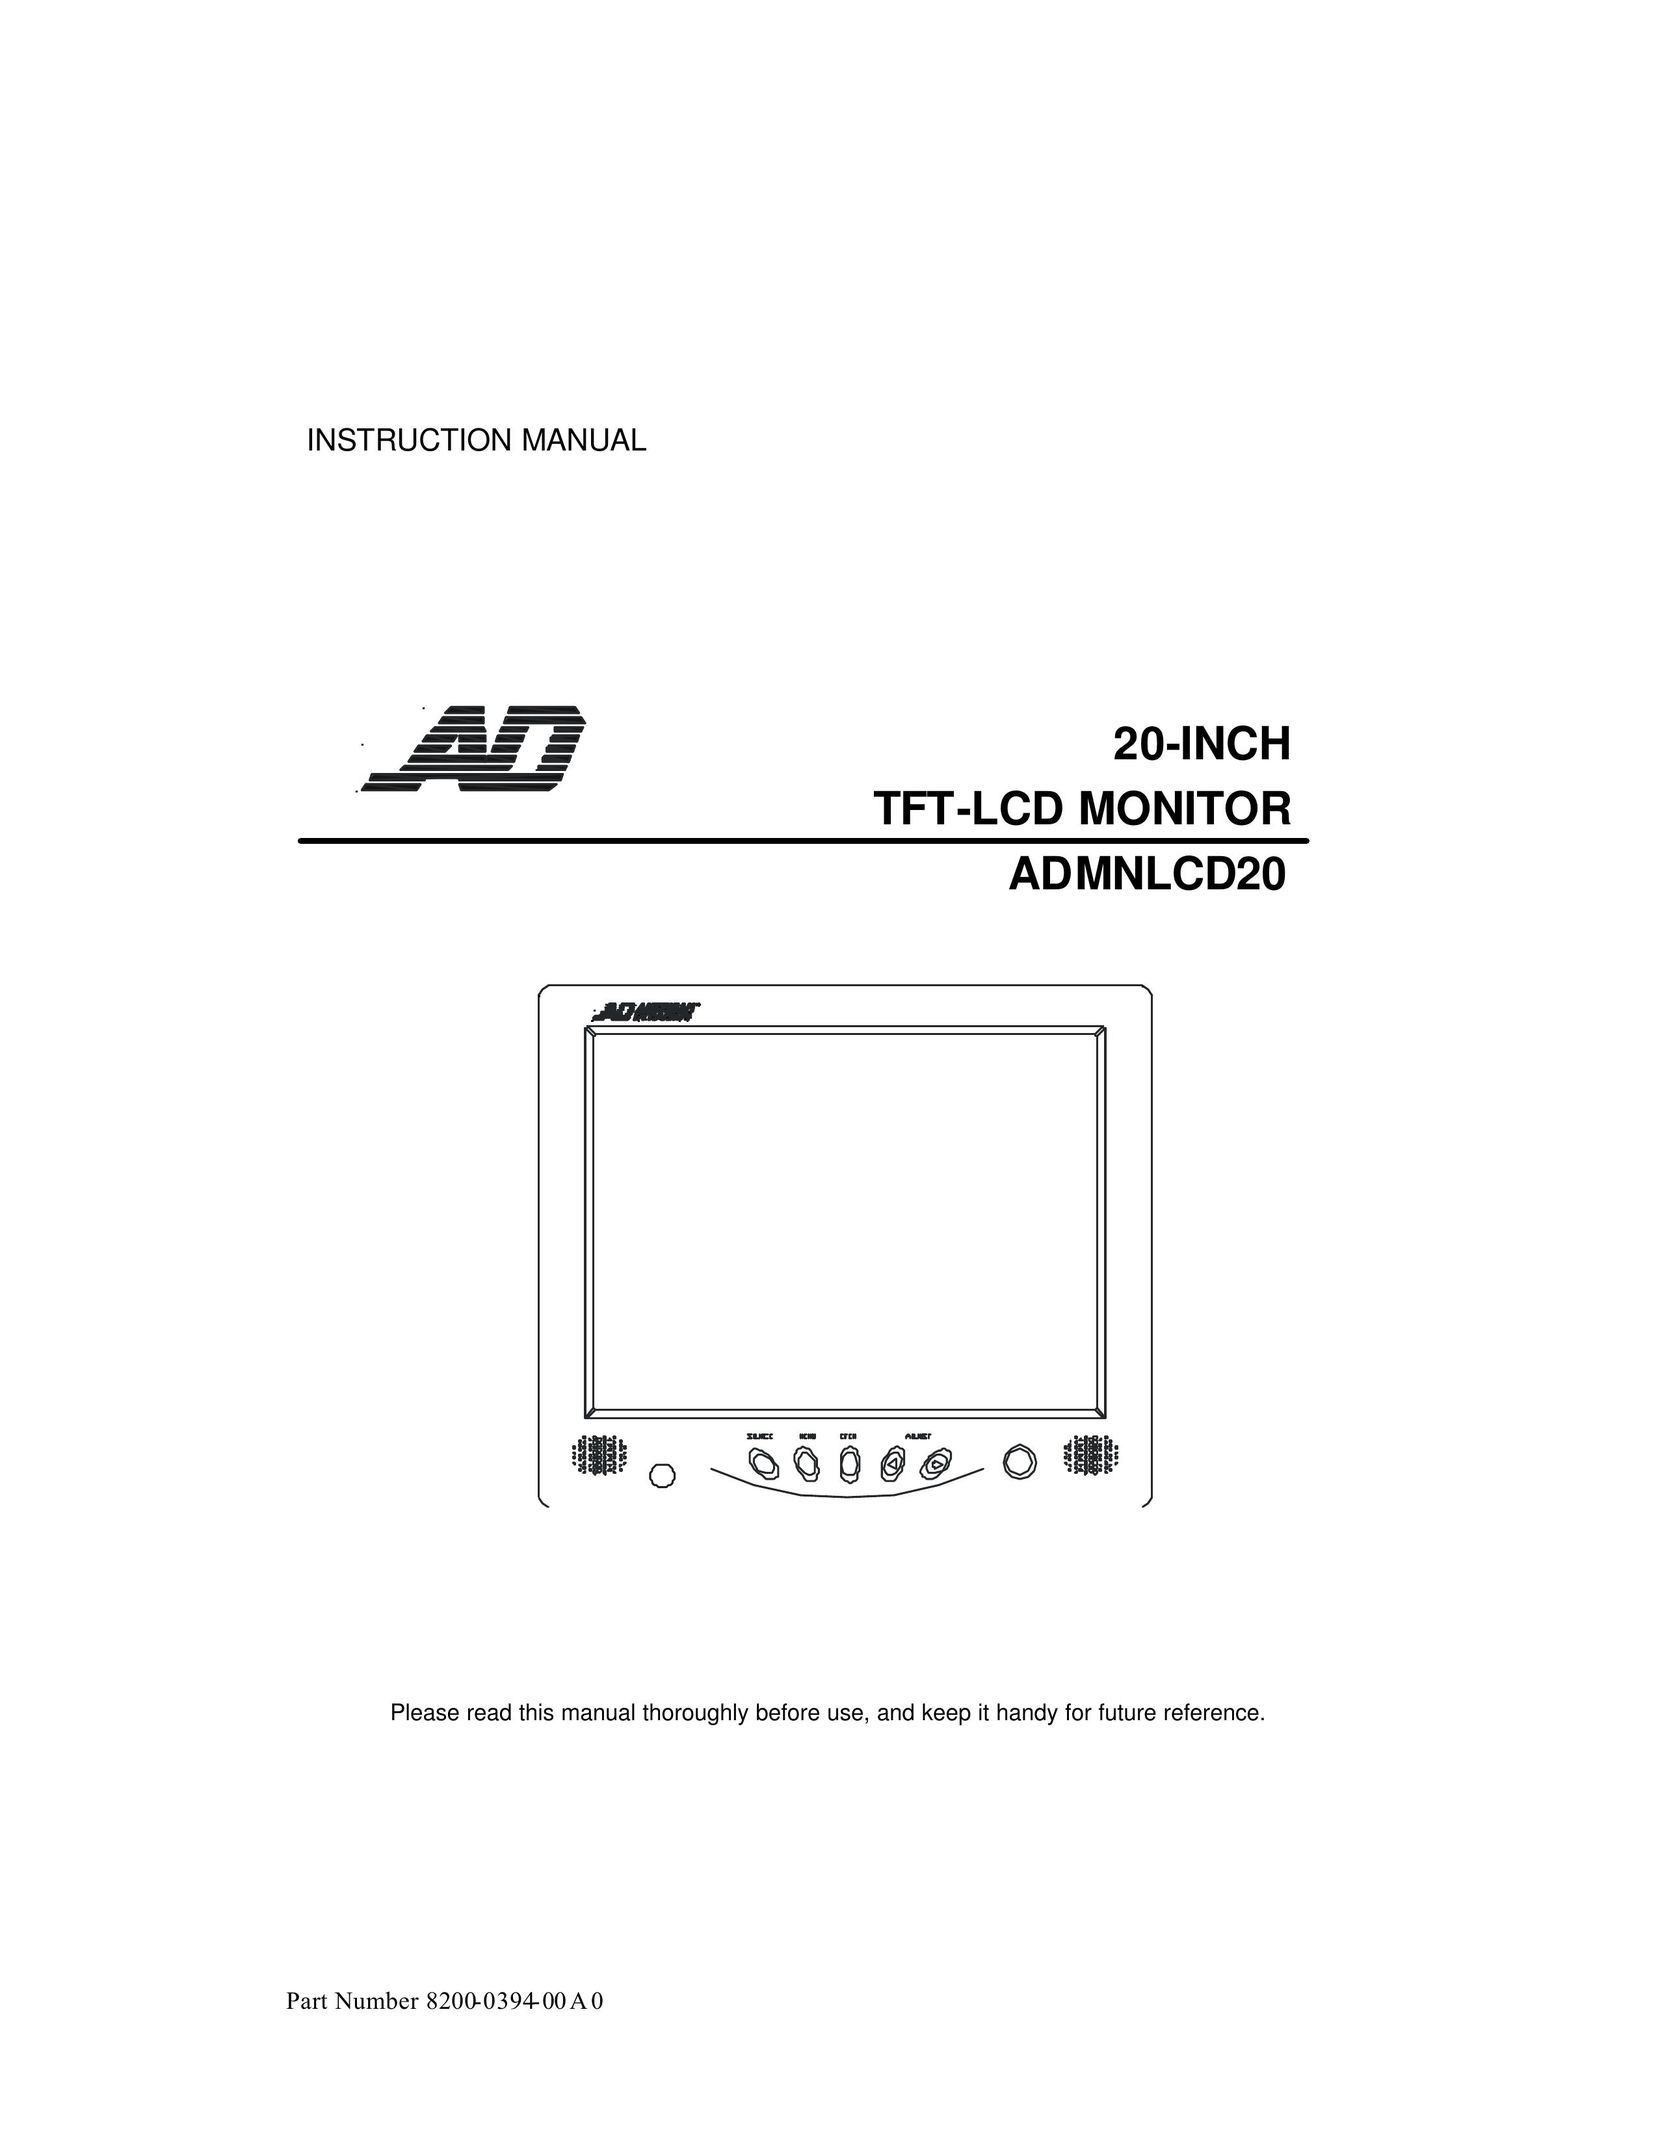 American Dynamics ADMNLCD20 Flat Panel Television User Manual